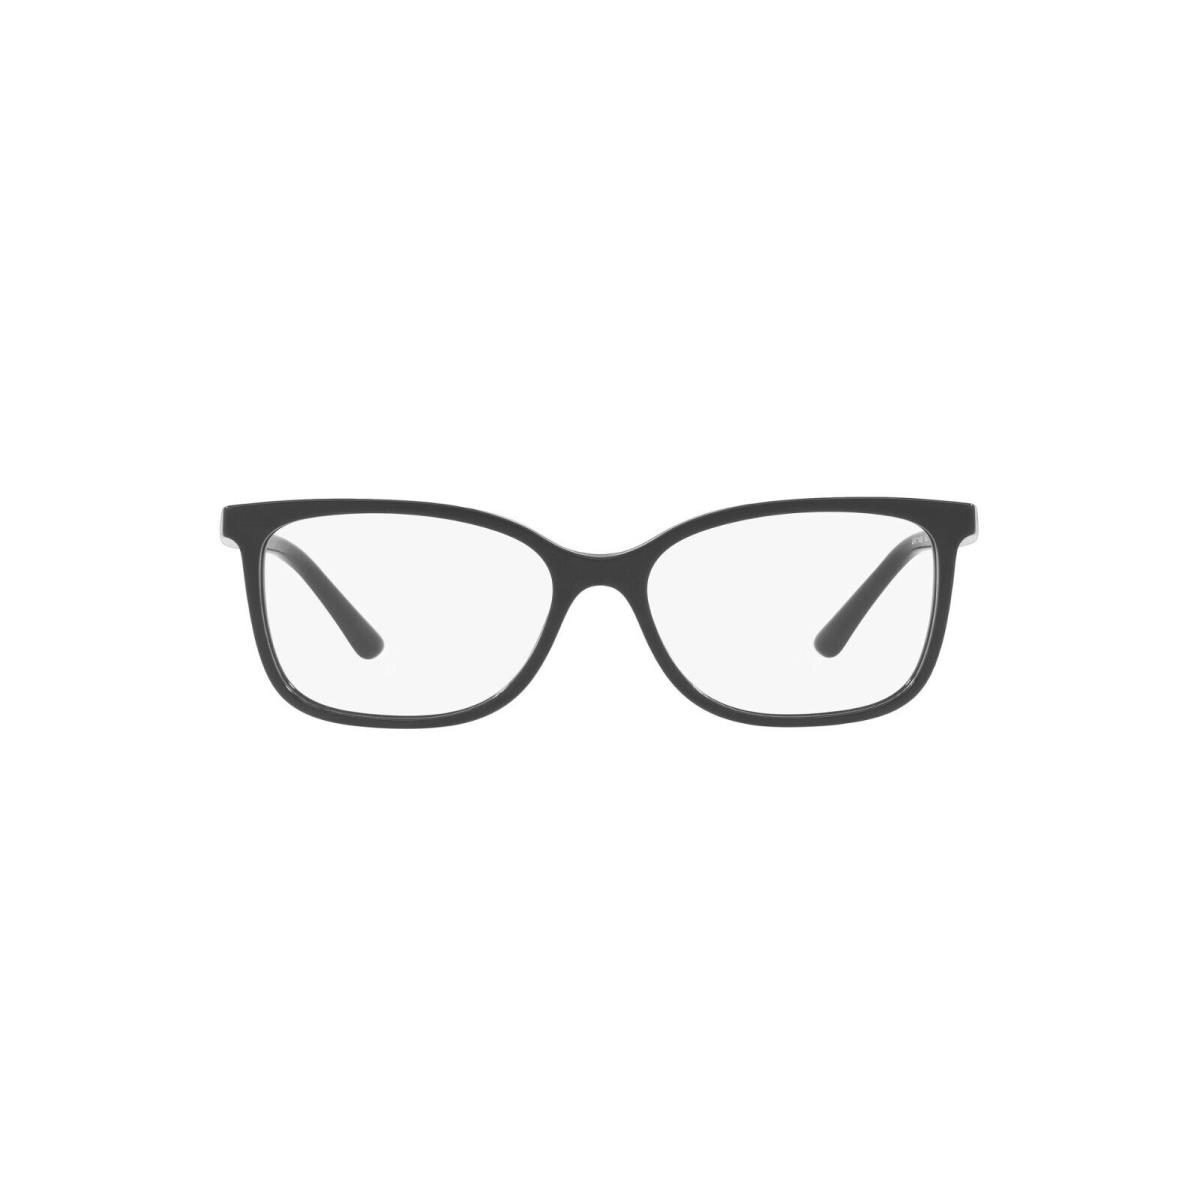 Giorgio Armani AR 7149 5017 Black Eyeglasses Acetate Frame 53-15-145 Italy